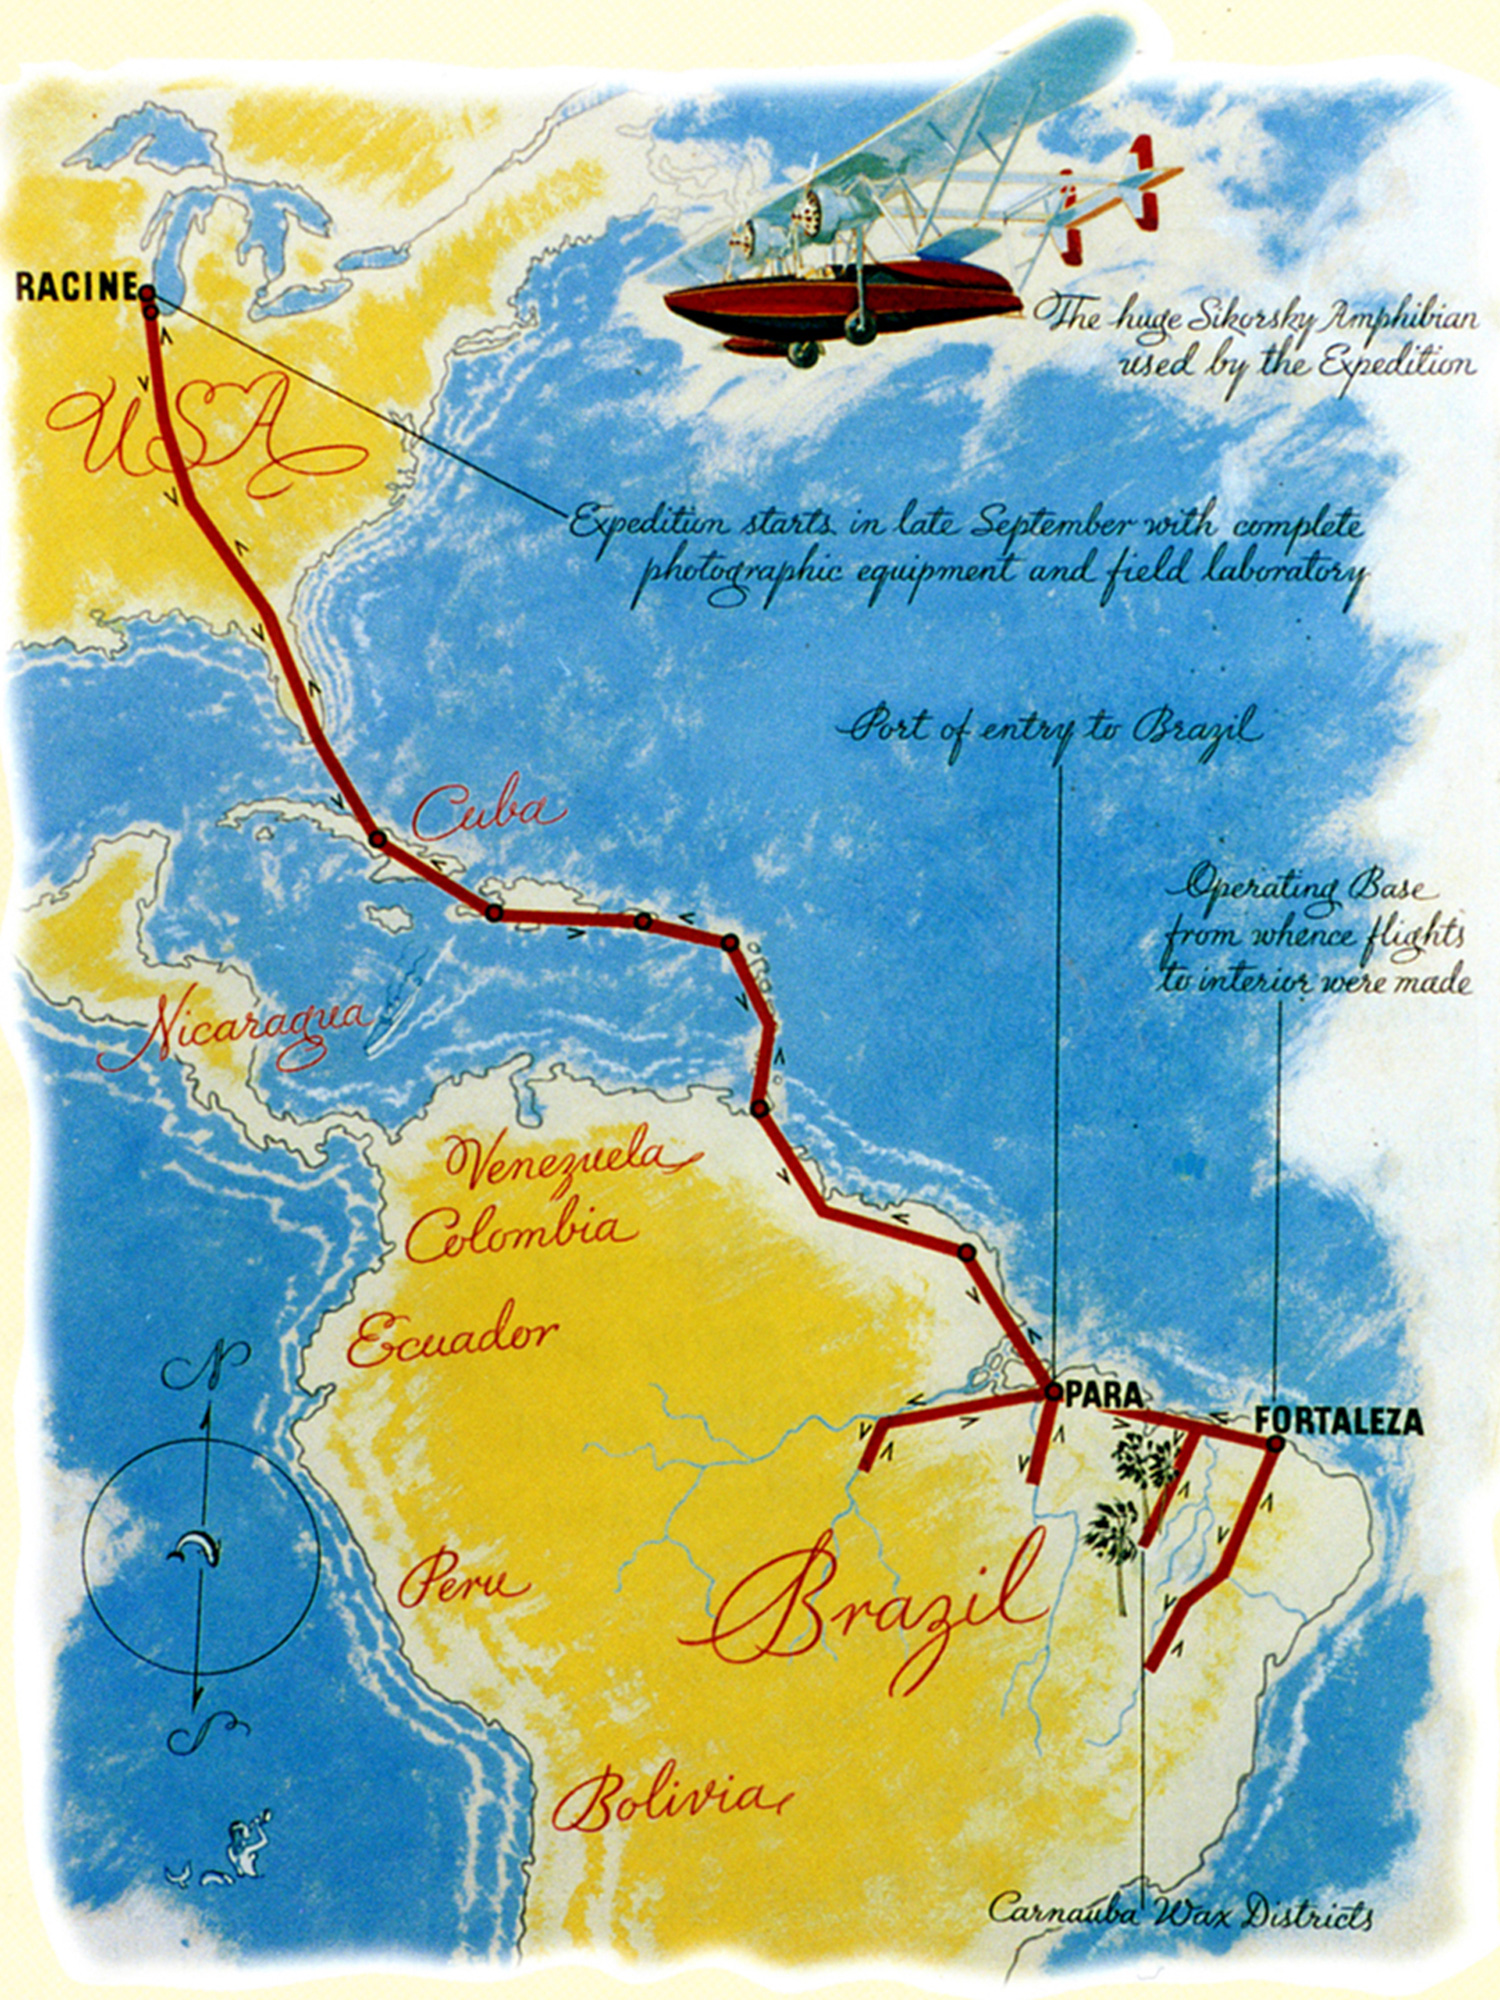 H.F. Johnson Jr.’s 1935 flight path to source carnaúba palm wax in Brazil.